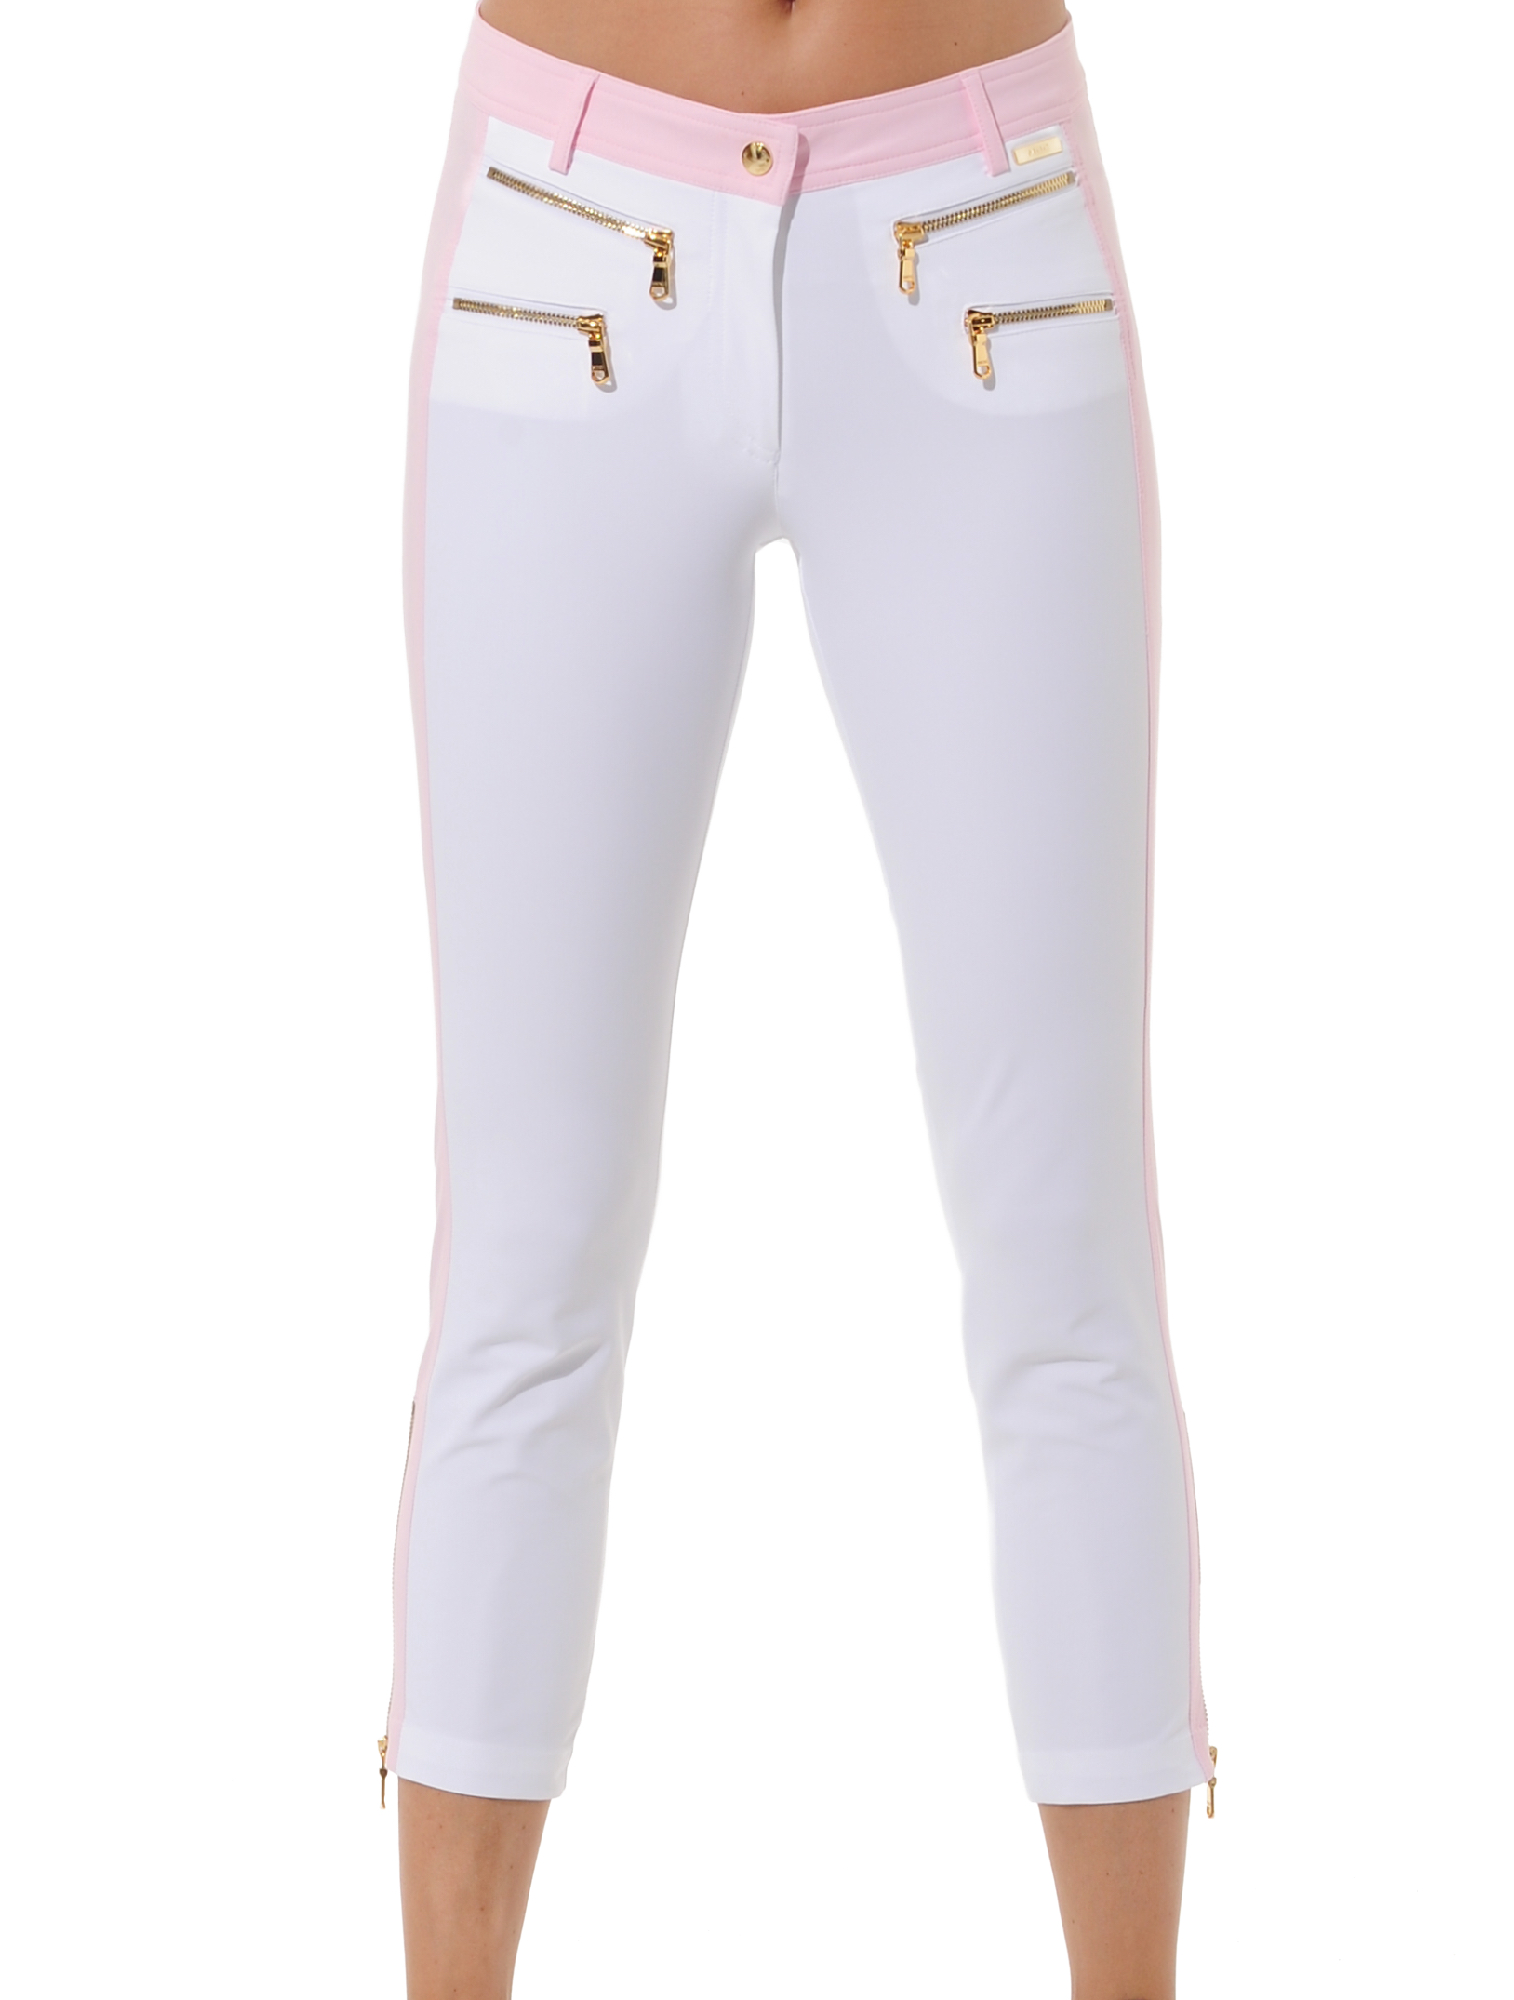 4way Stretch Shiny Gold Double Zip Cropped Pants white/macaron